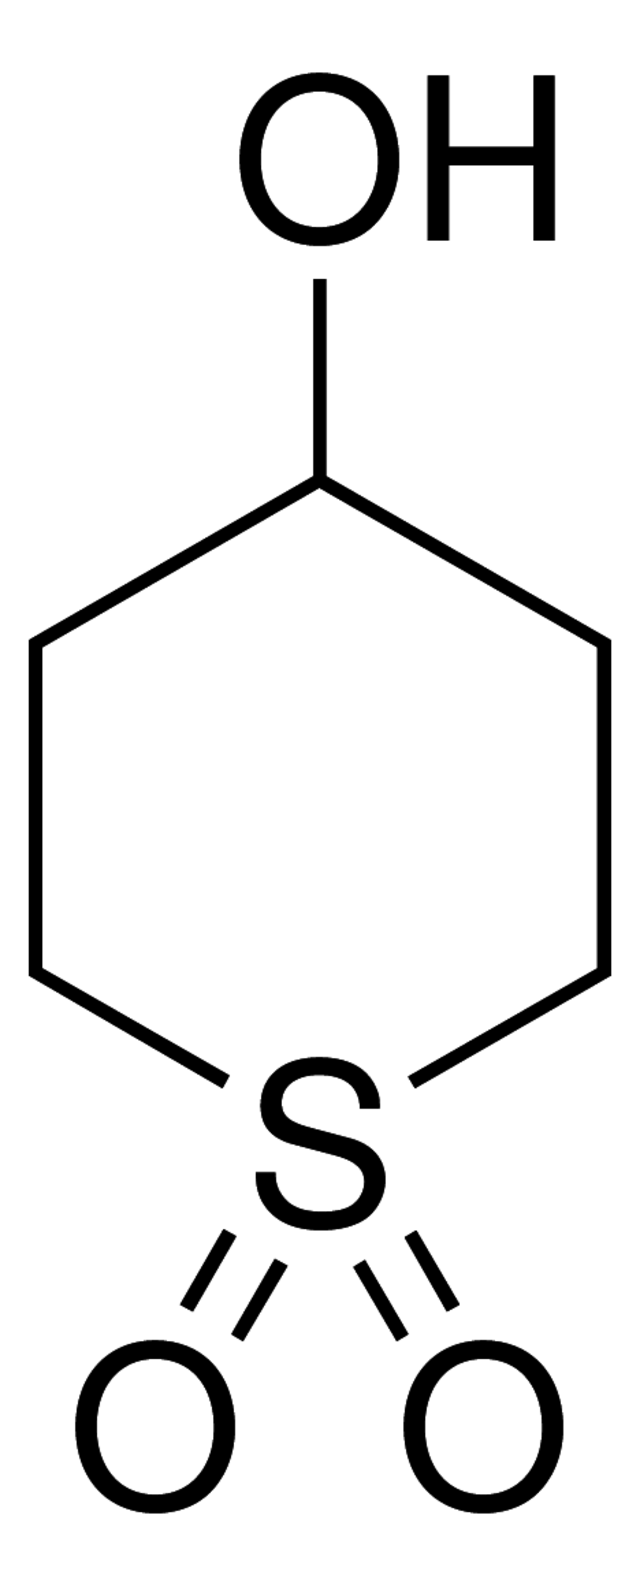 Tetrahydro-2H-thiopyran-4-ol 1,1-dioxide,194152-05-1